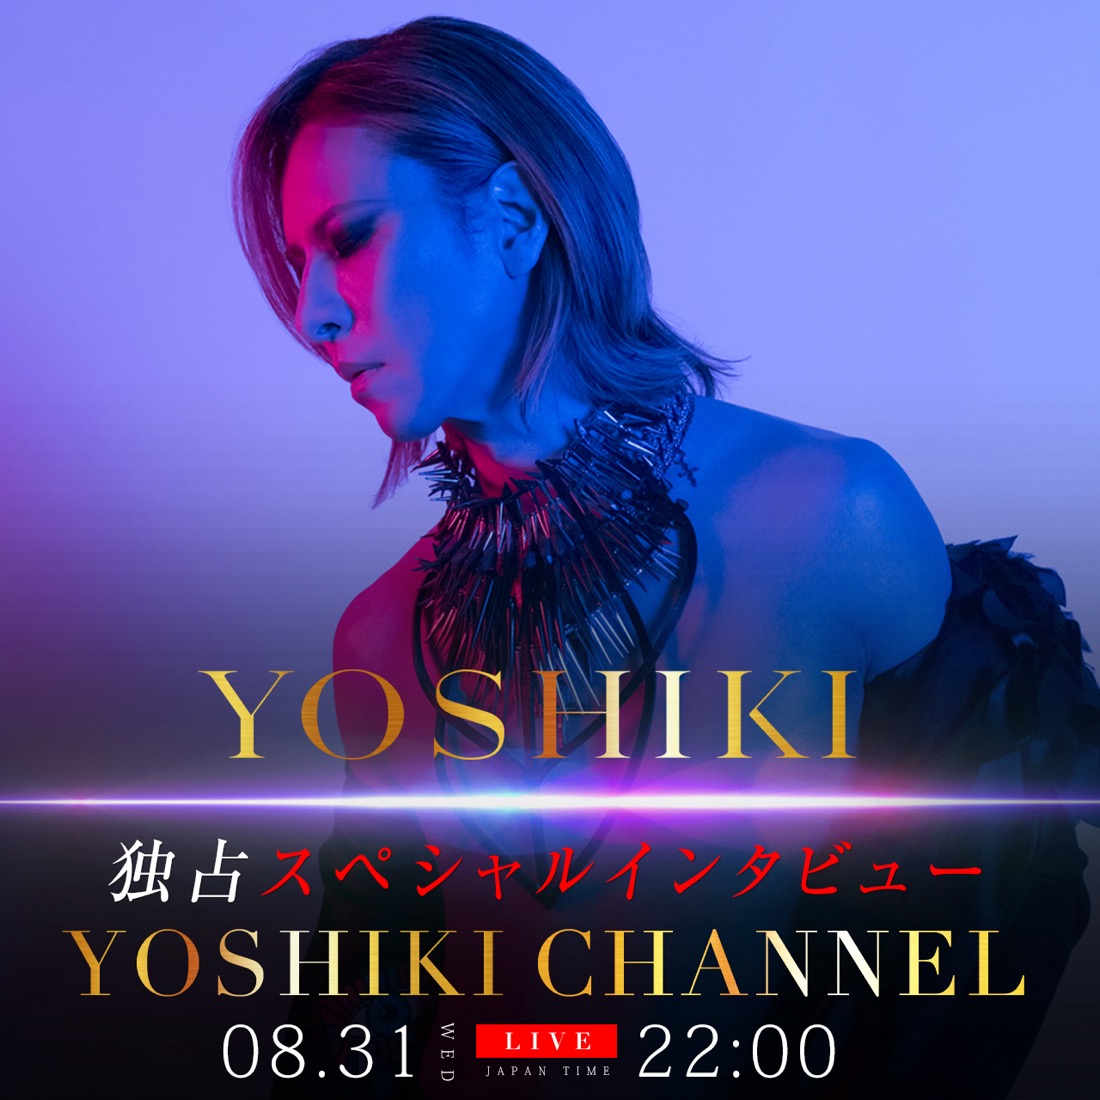 『YOSHIKI CHANNEL』にて、YOSHIKIへの独占スペシャルインタビューが実現